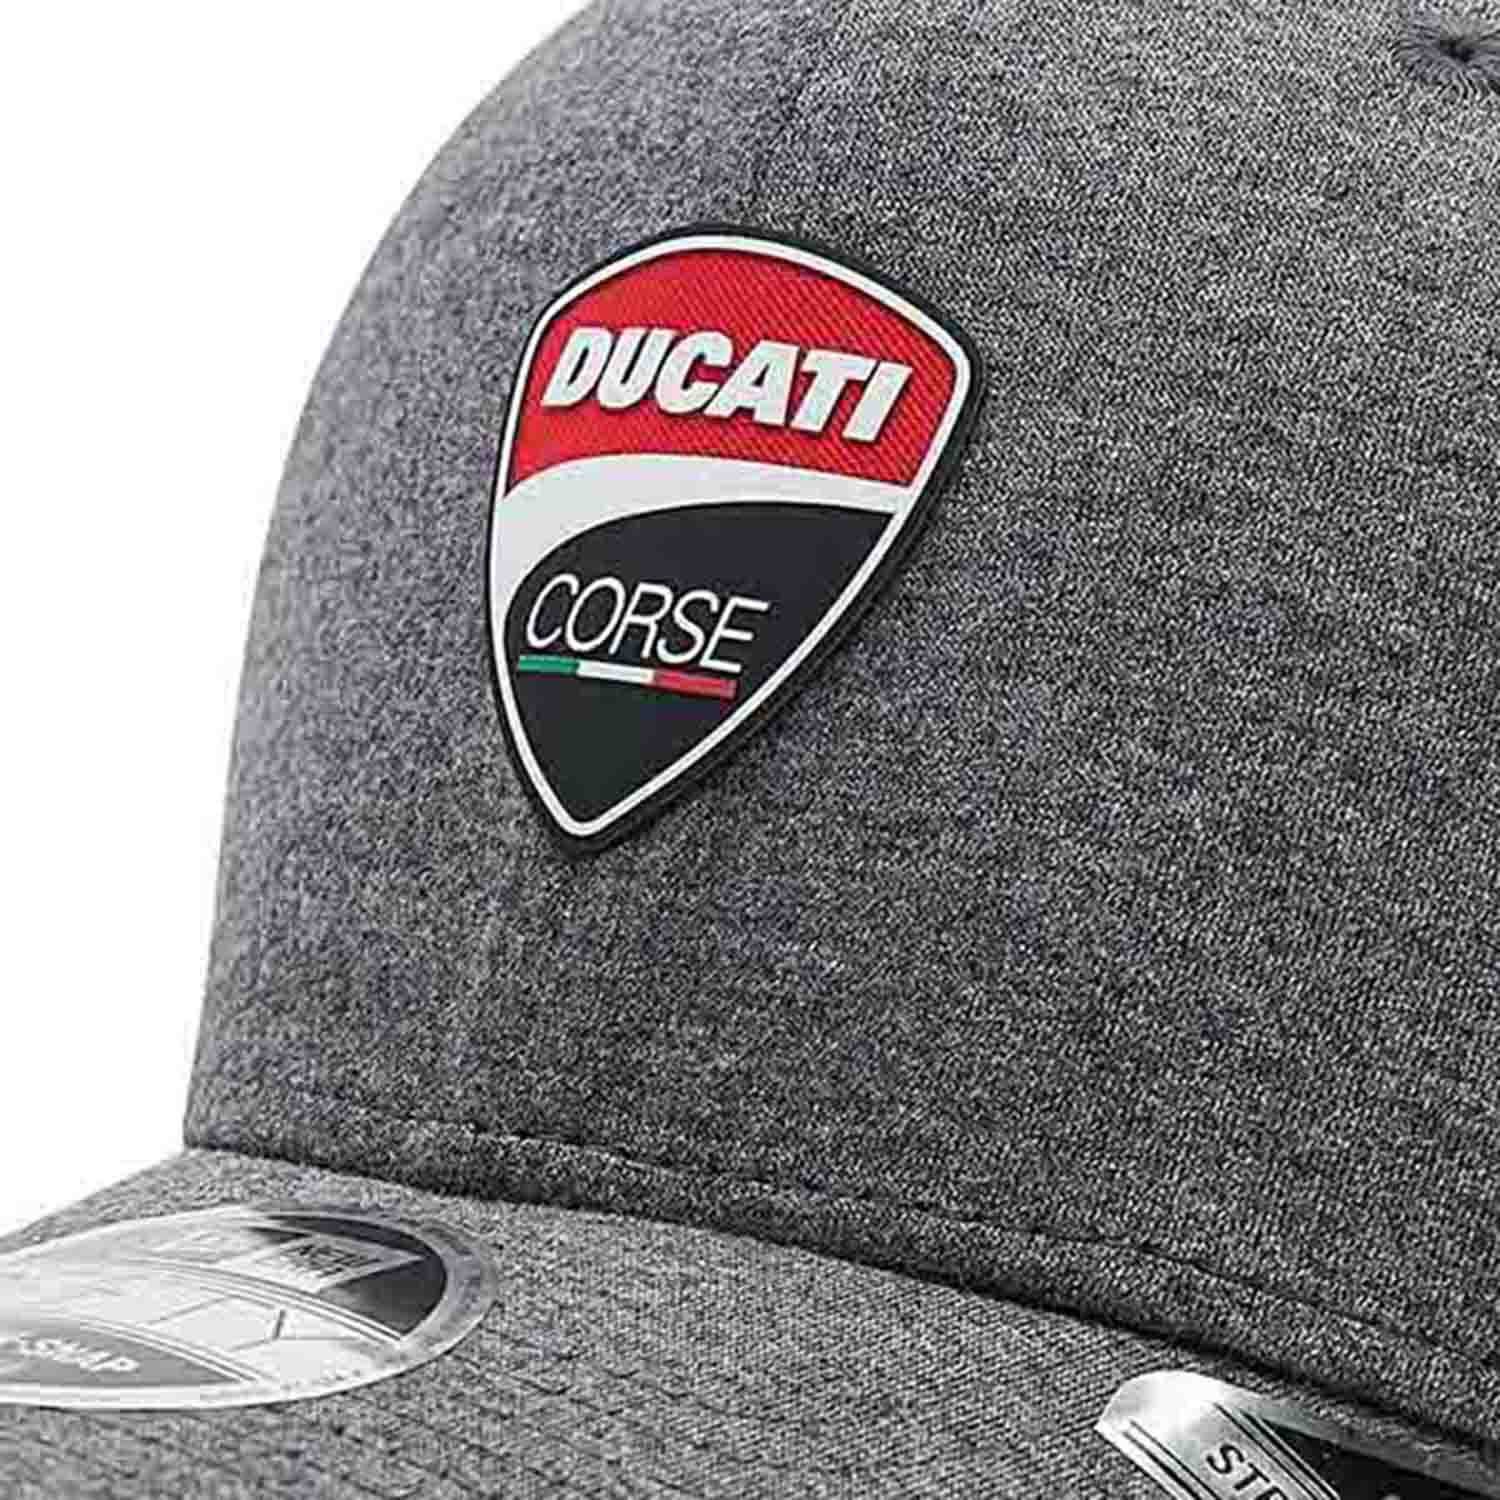 Ducati Corse Jersey Grey 9FIFTY Stretch Snap Cap - Ducati - Fueler store